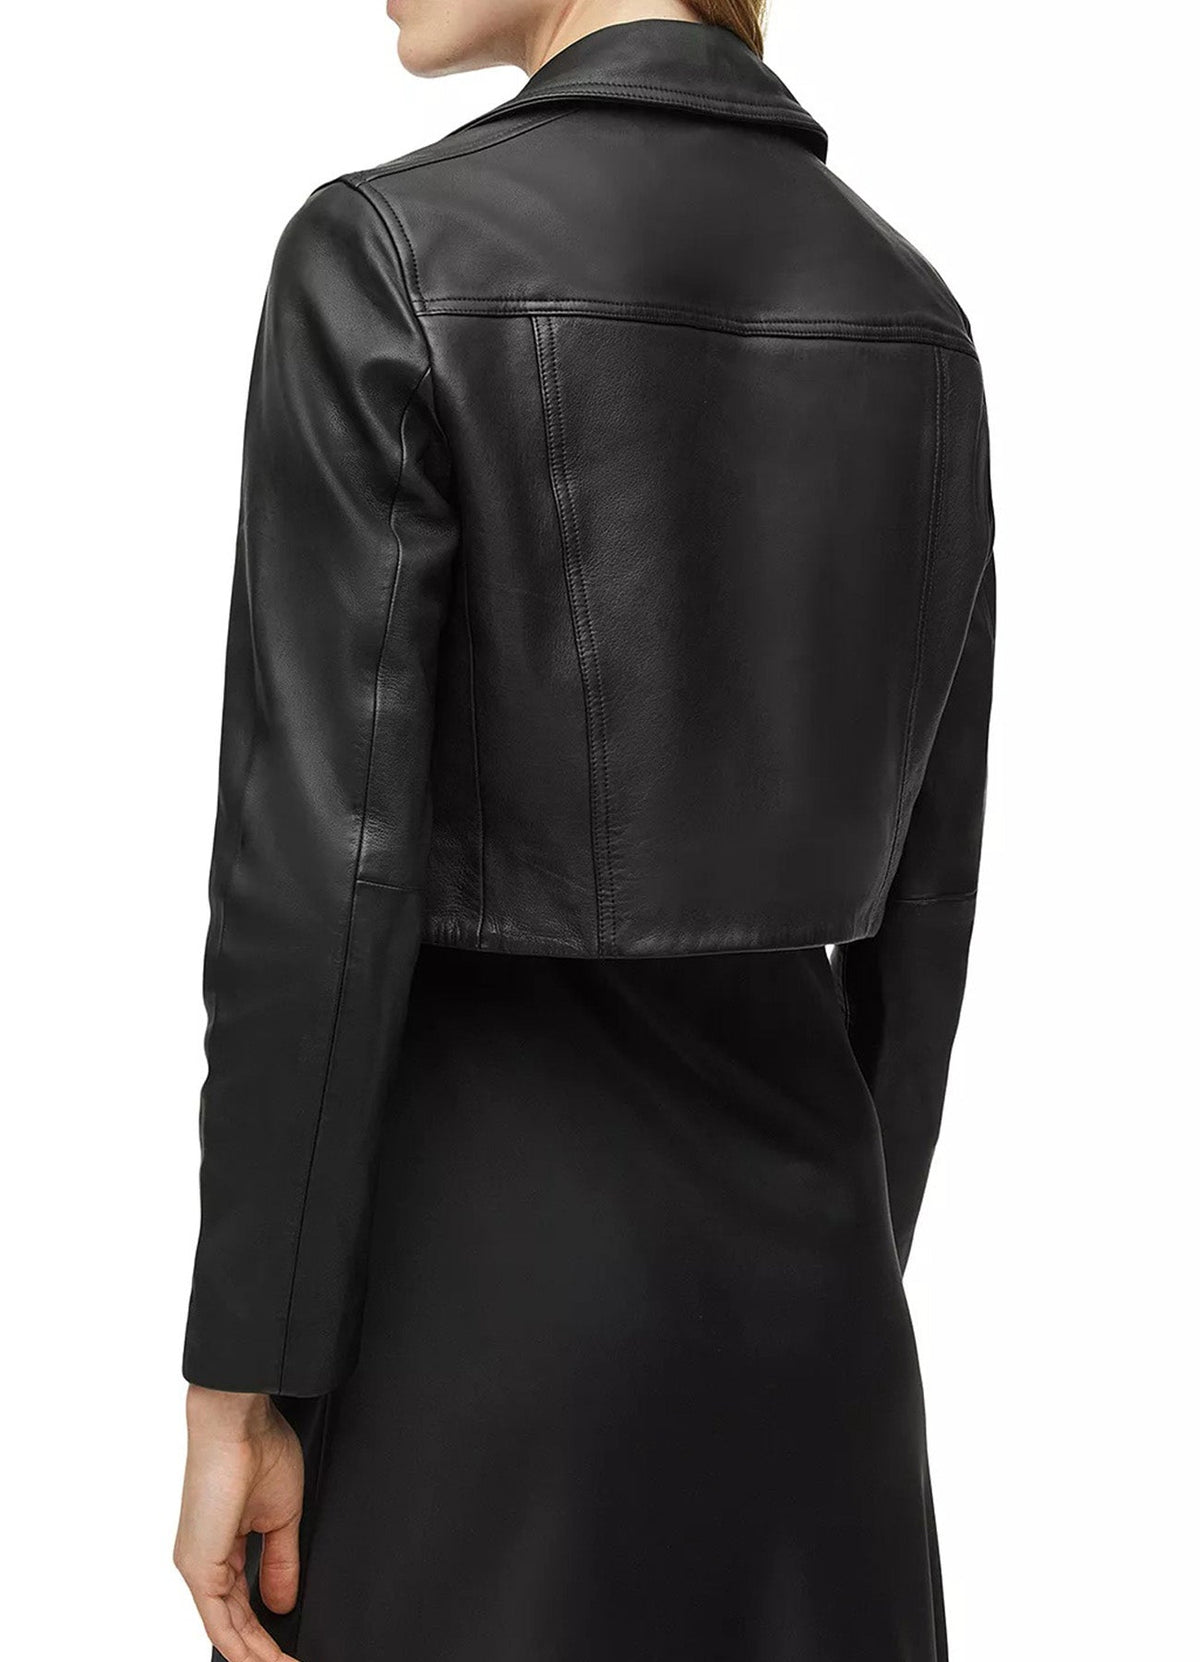 Womens Short Length Black Biker Leather Jacket